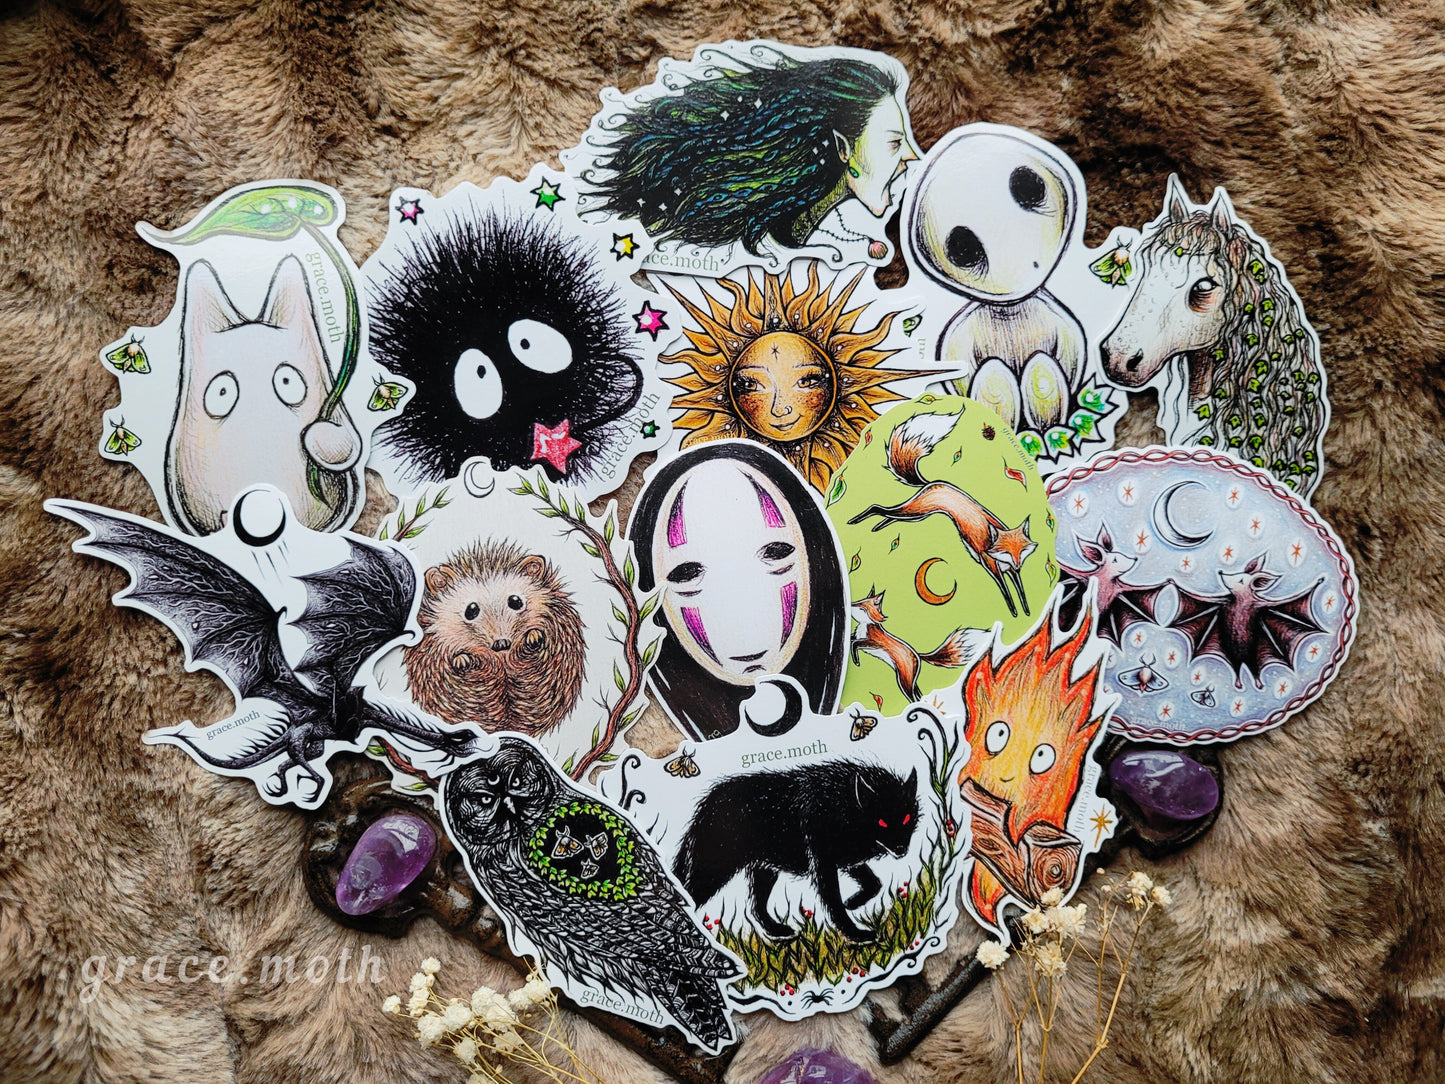 Tree spirit - Vinyl Sticker 10cm - Japanese Anime inspired art - Witchy - Gothic - Illustrated by Grace moth